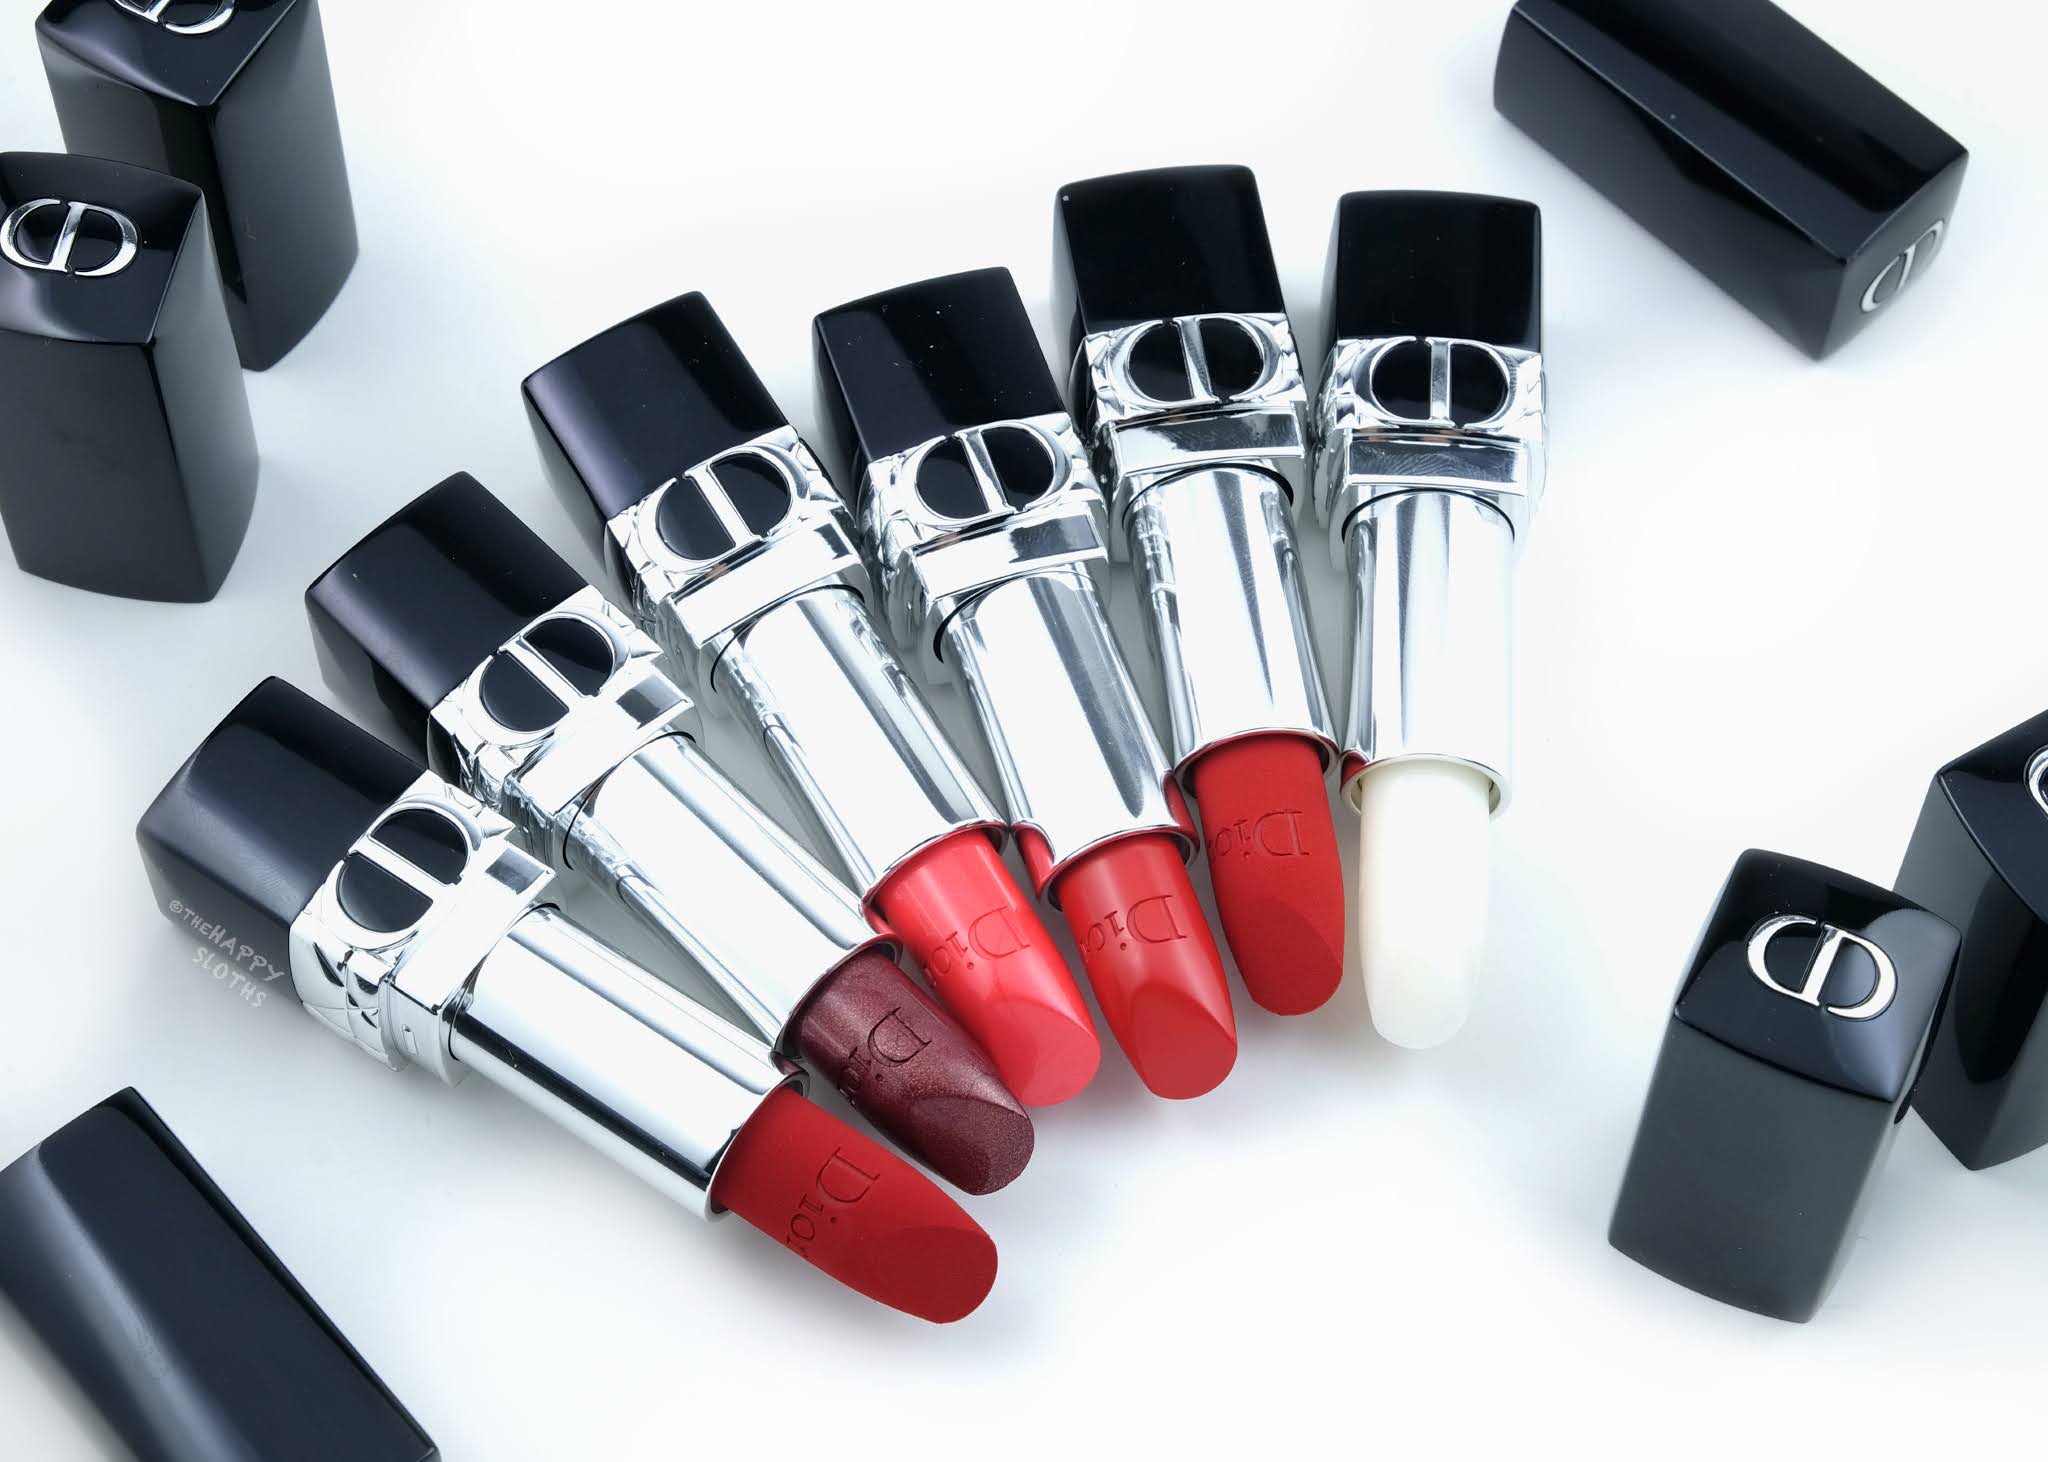 Dior Addict Lip Makeup Set  Retail  Miniature Formats  DIOR